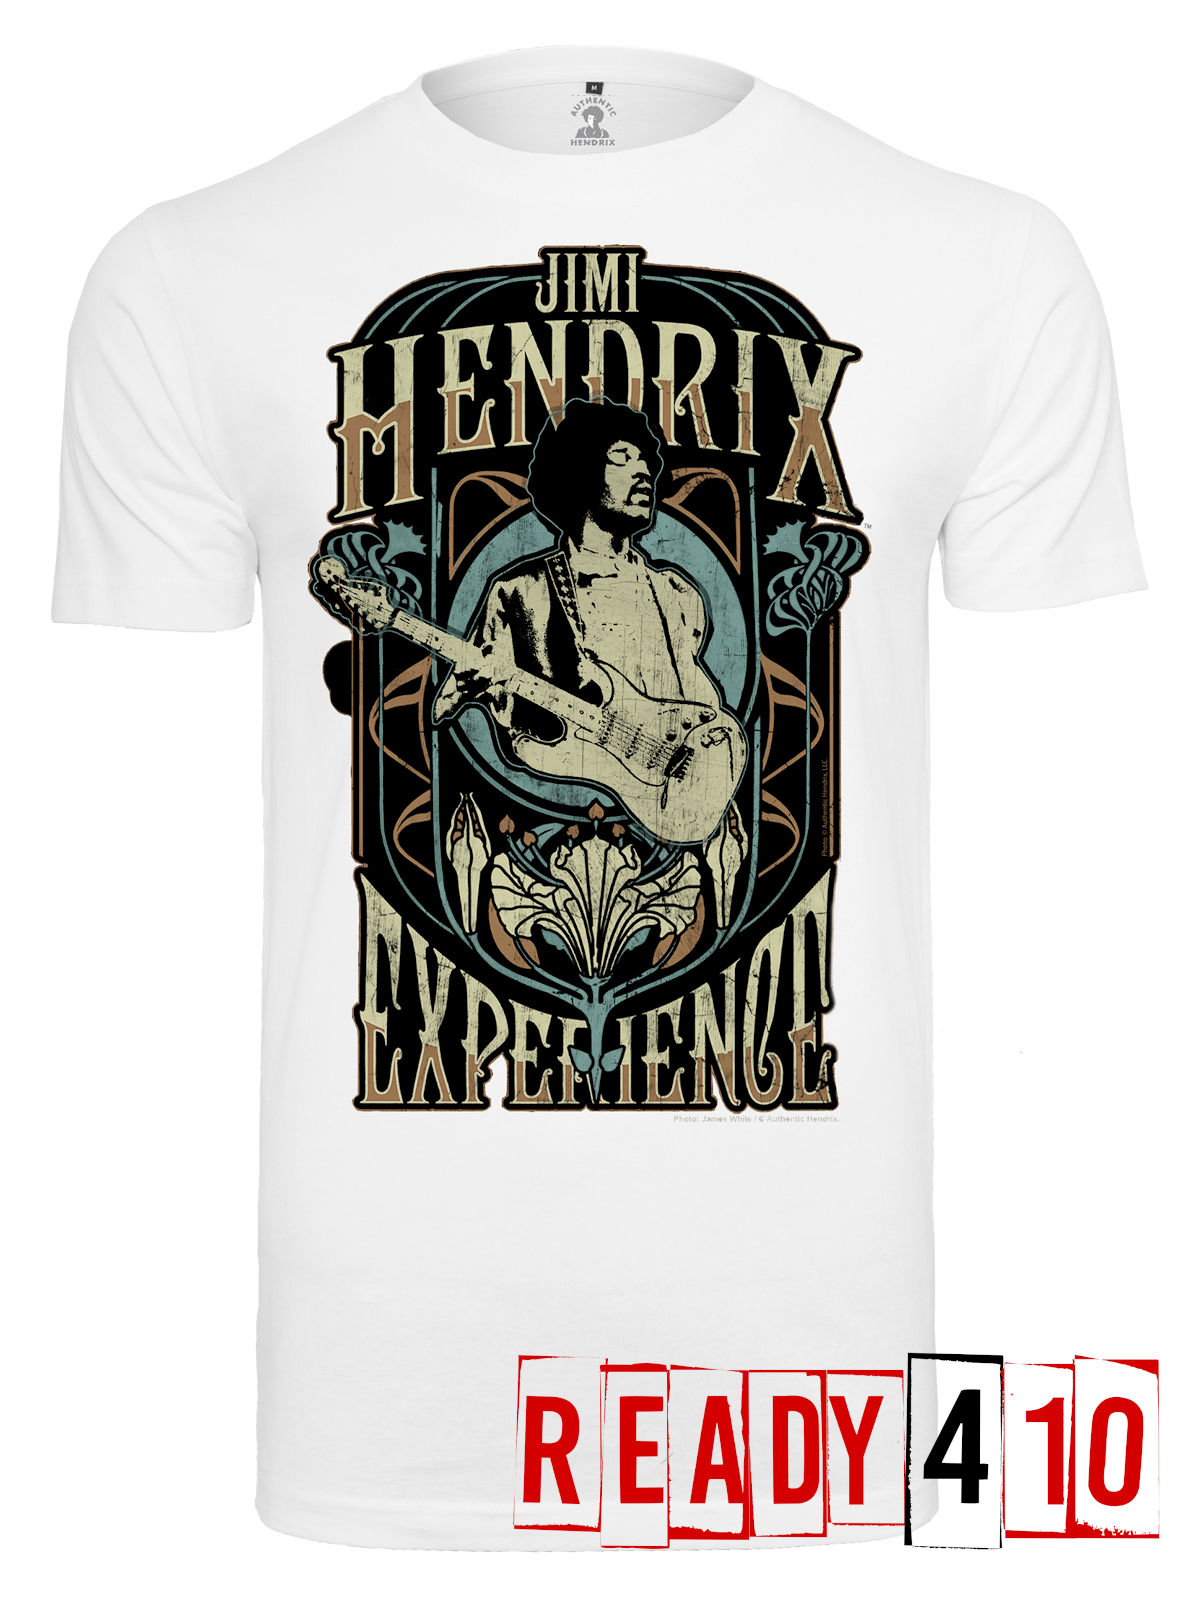 Authentic Hendrix Jimi Hendrix Experience Shirt - White - ready410.com